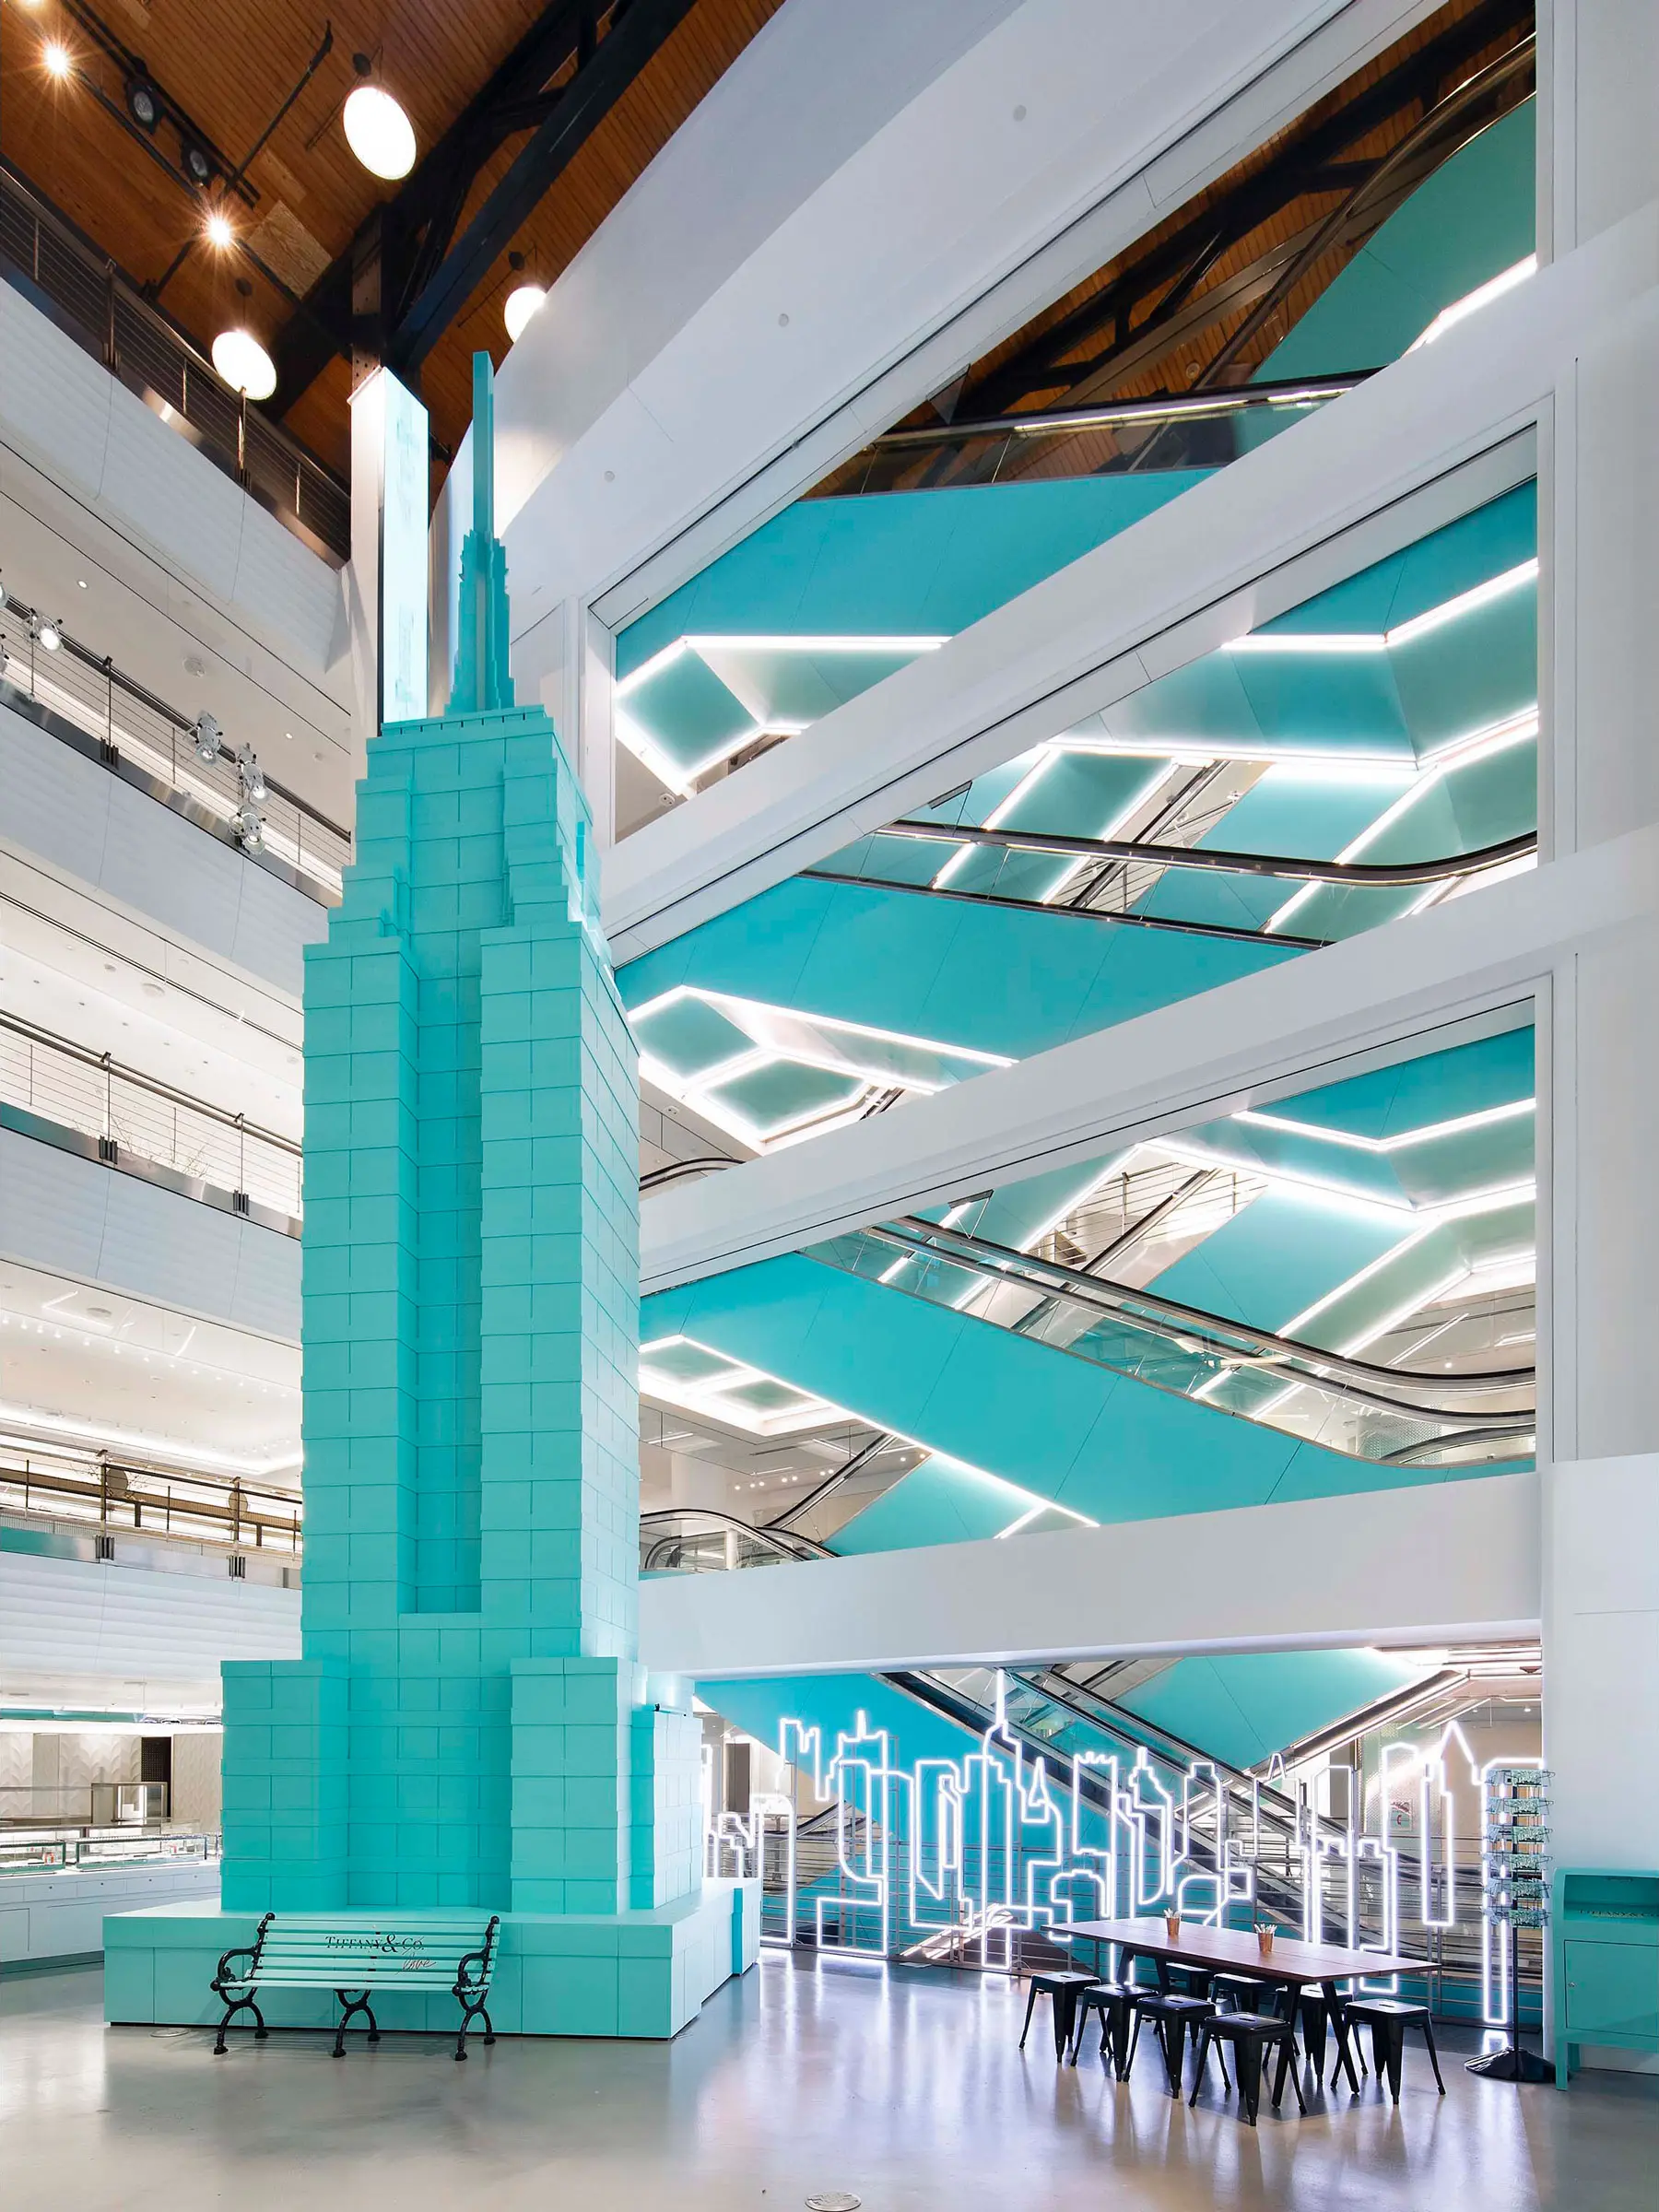 Tiffany & Co. maps three-year renovation of vital flagship store